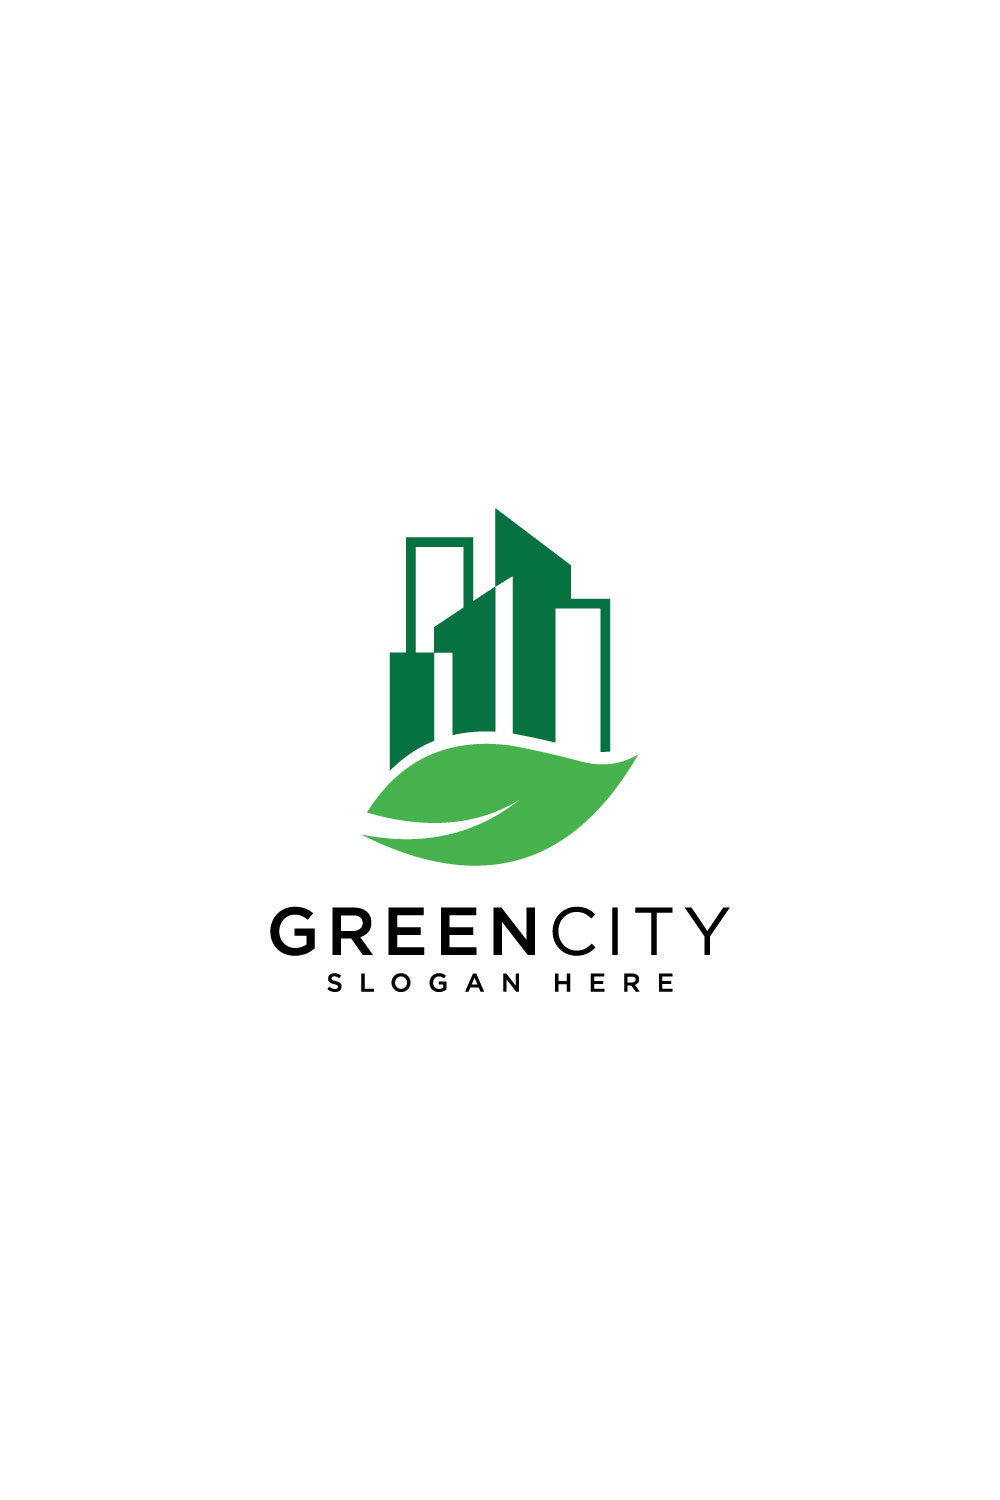 green city logo vector design pinterest preview image.